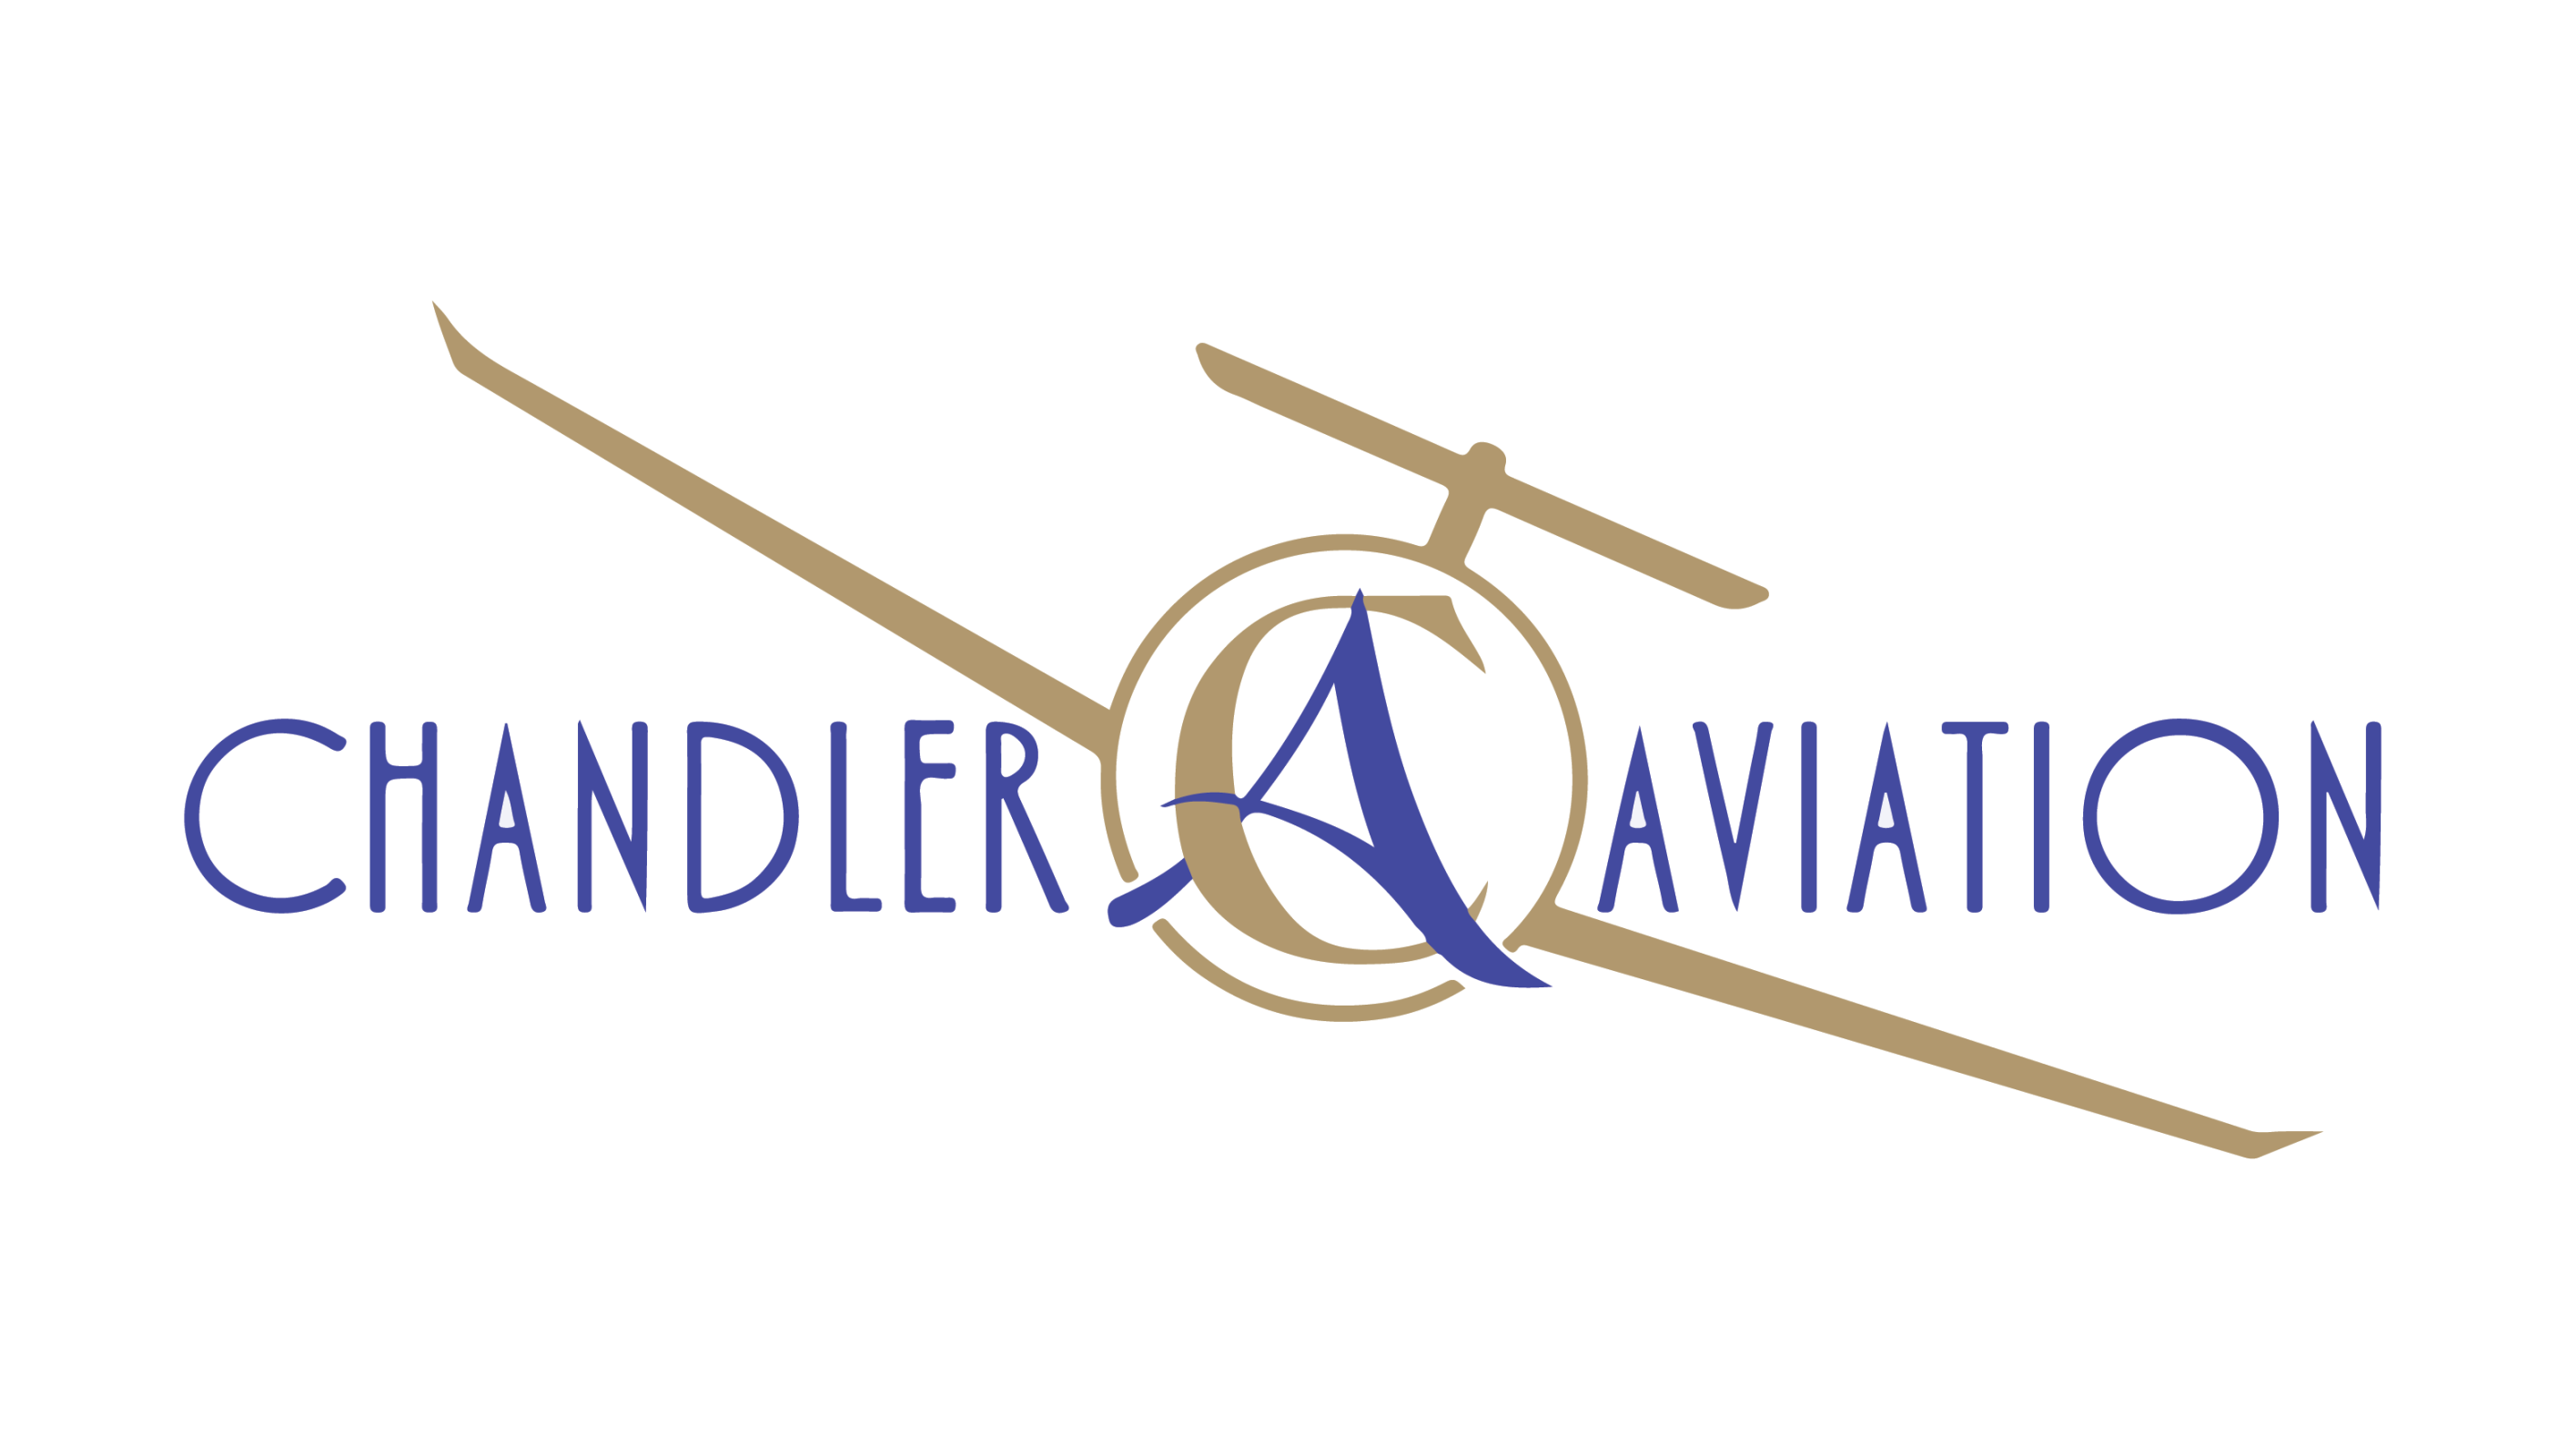 Chandler Aviation's Image